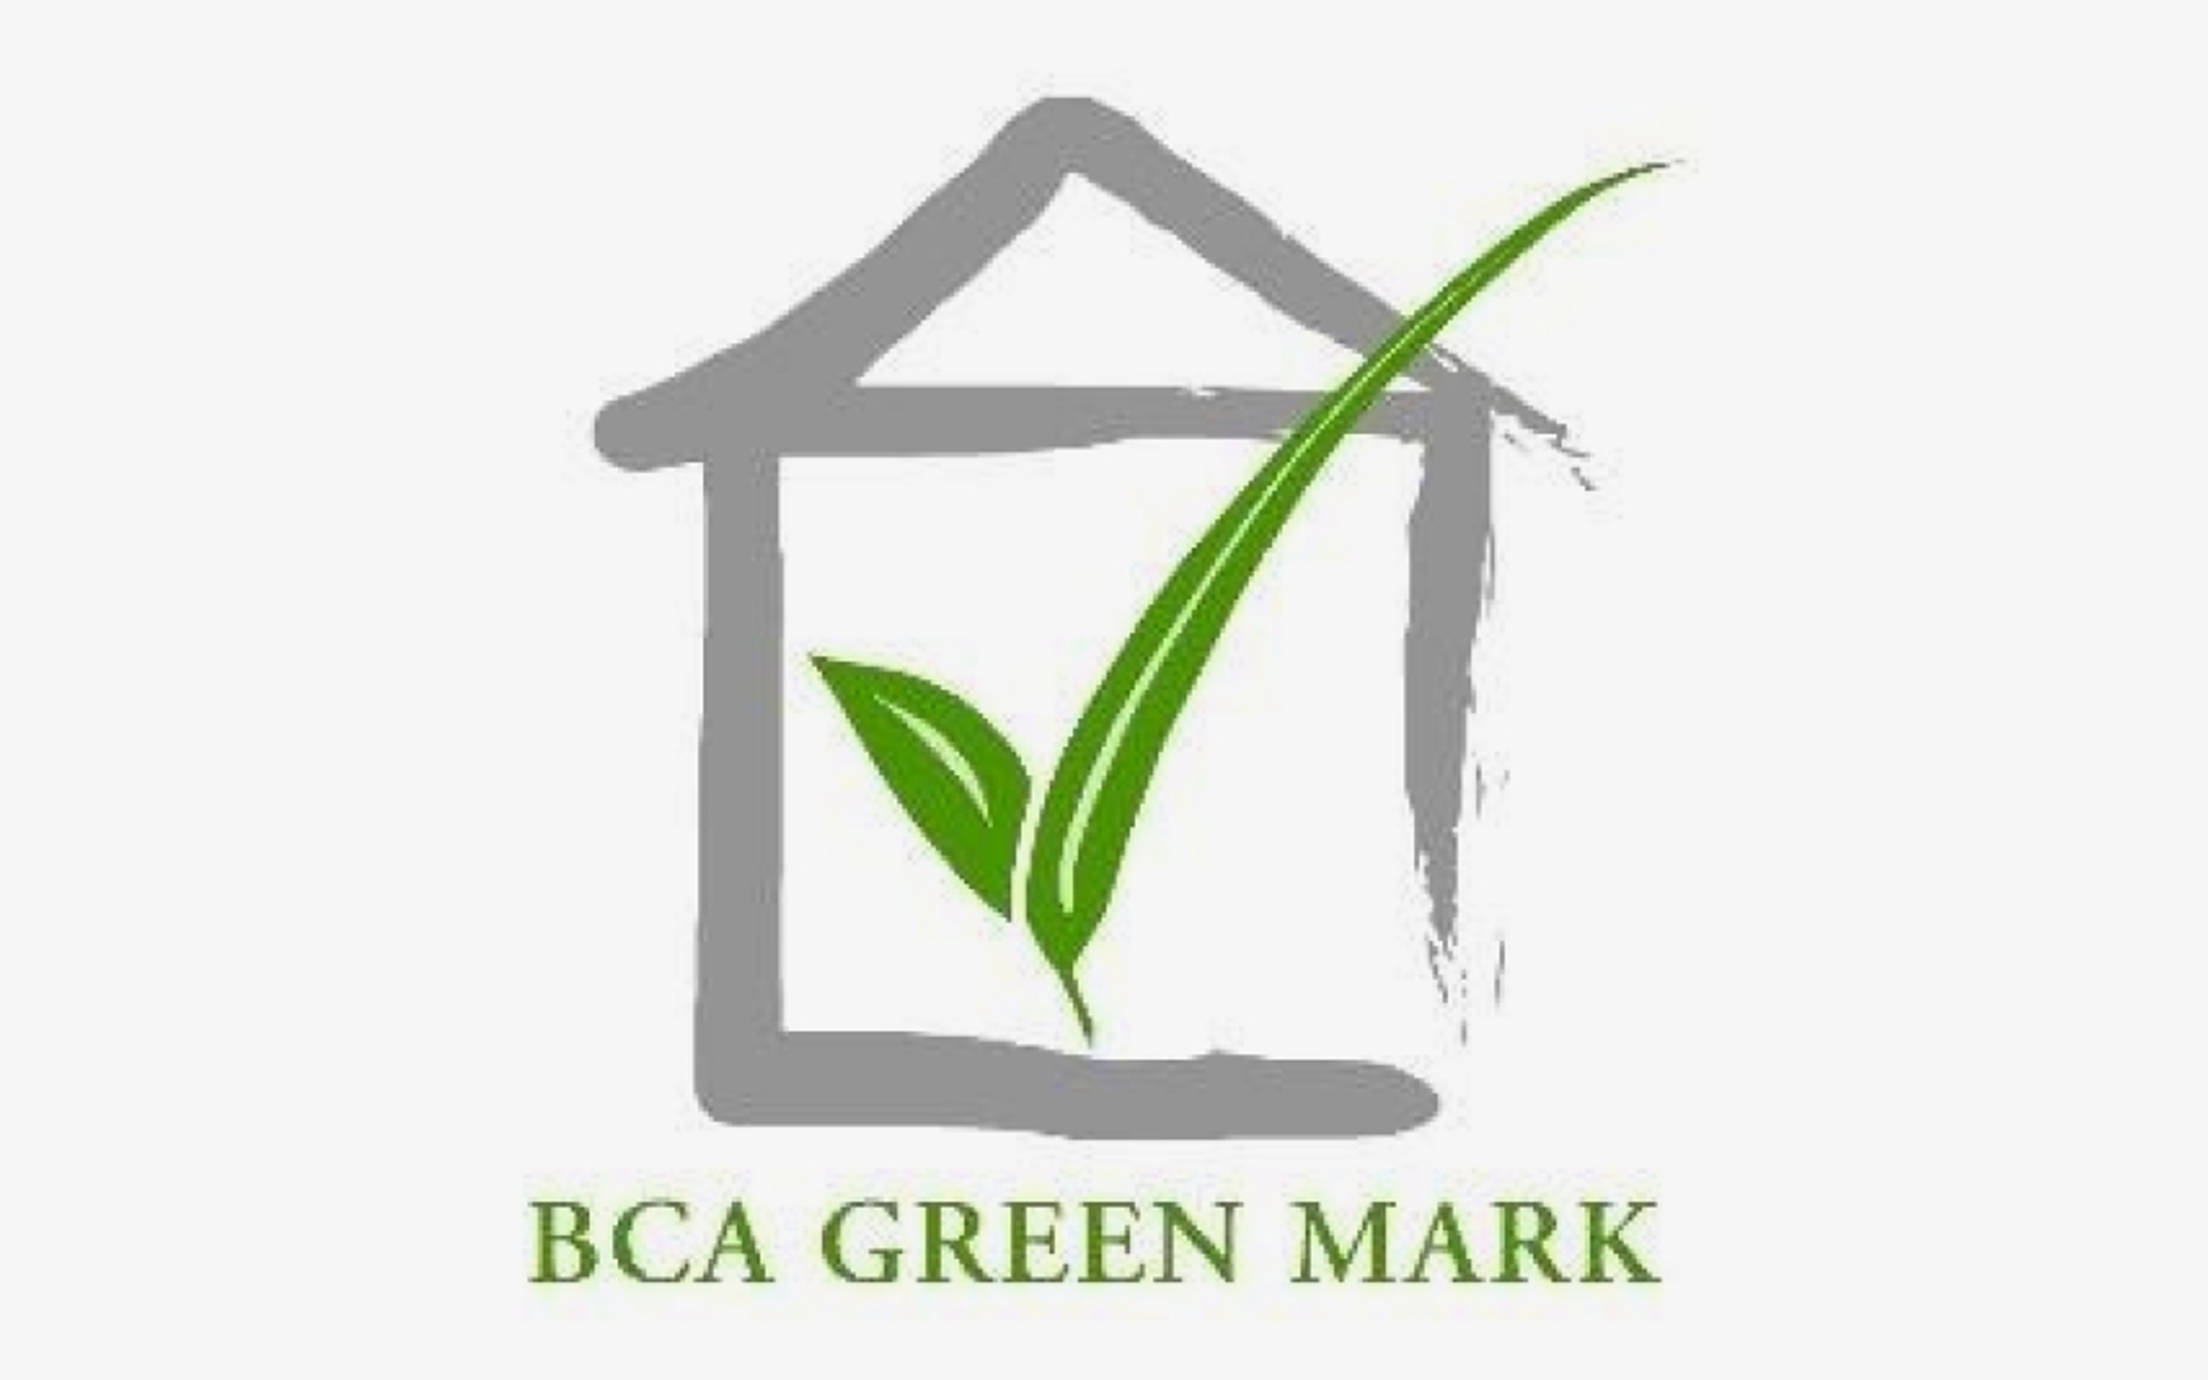 BCA Green Mark Scheme logo on gray background